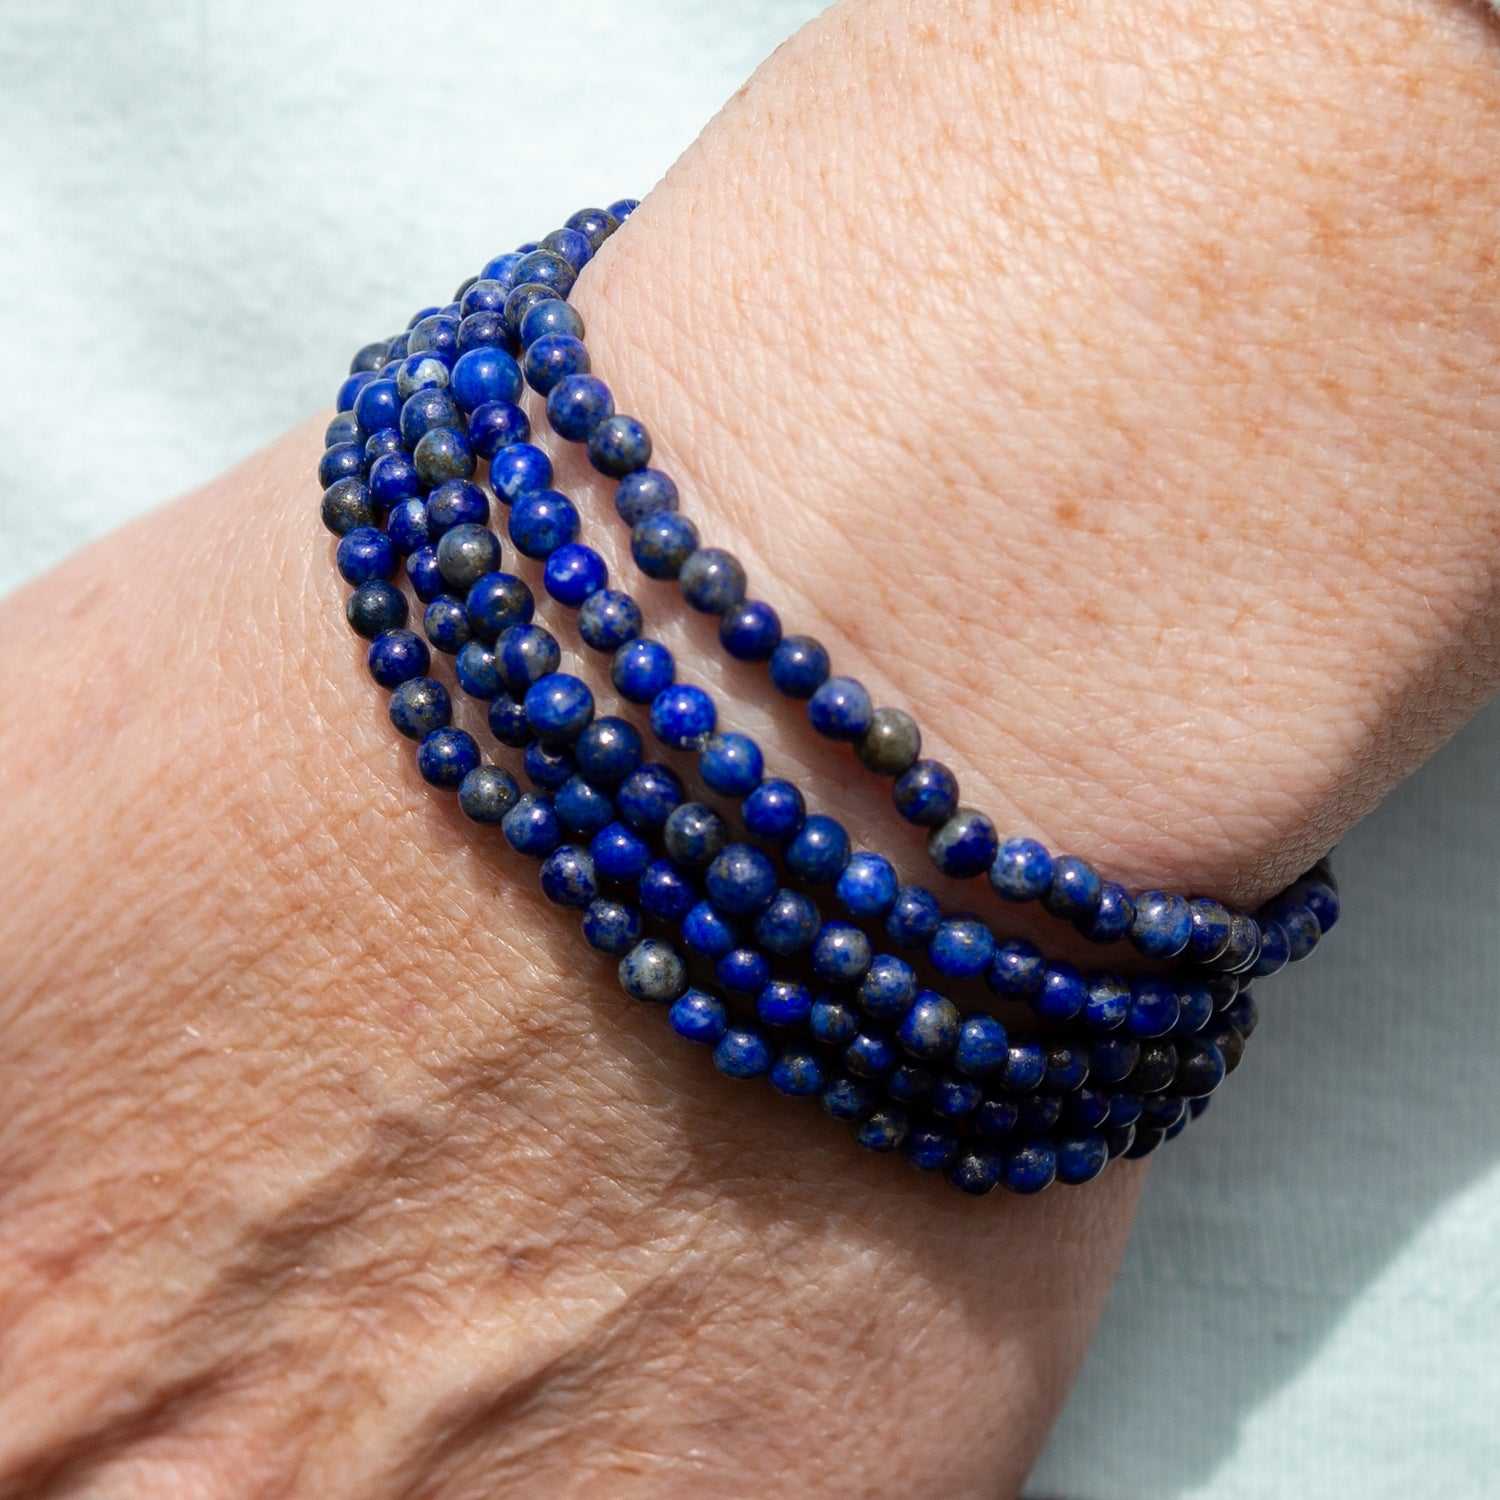 PGD Energy Minis Lapis Lazuli